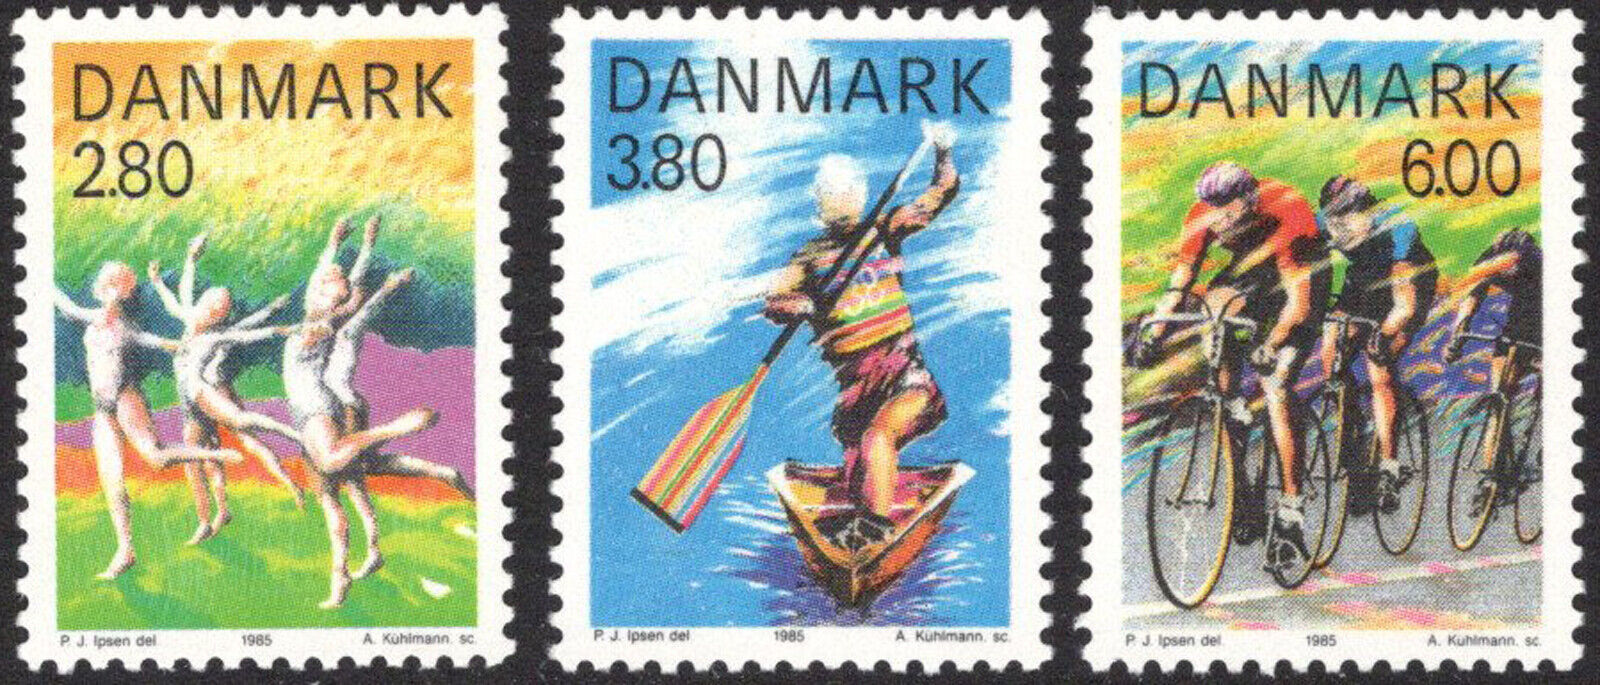 1985 Denmark #780-782 Sports Recreation Canoe Kayak Cycling Bicycles